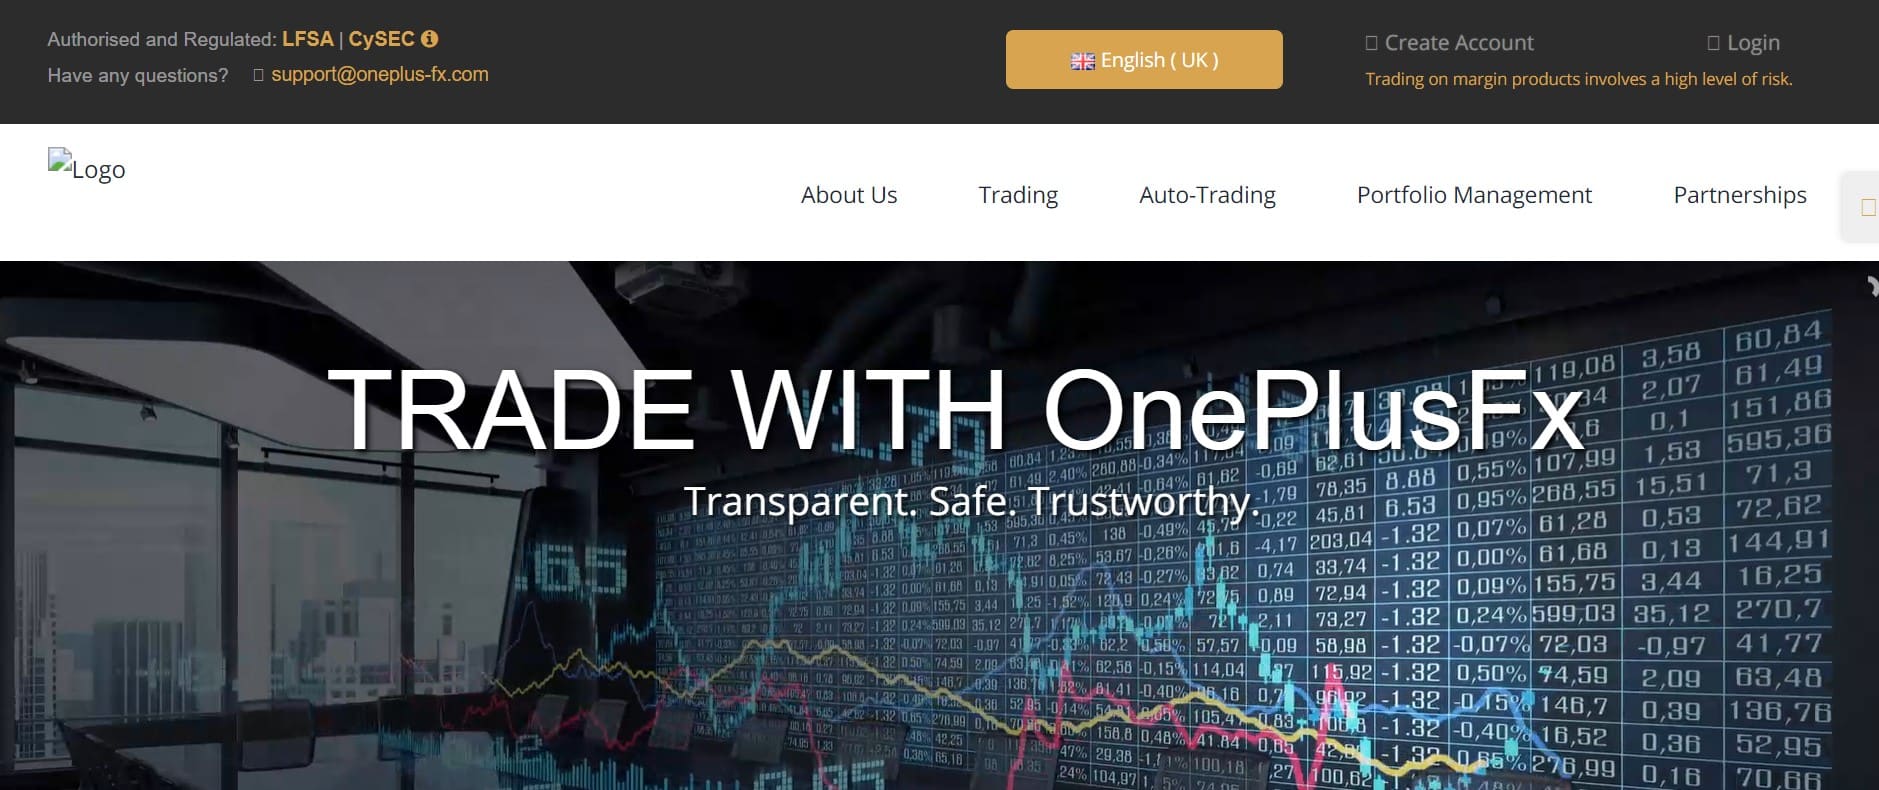 OnePlusFx website